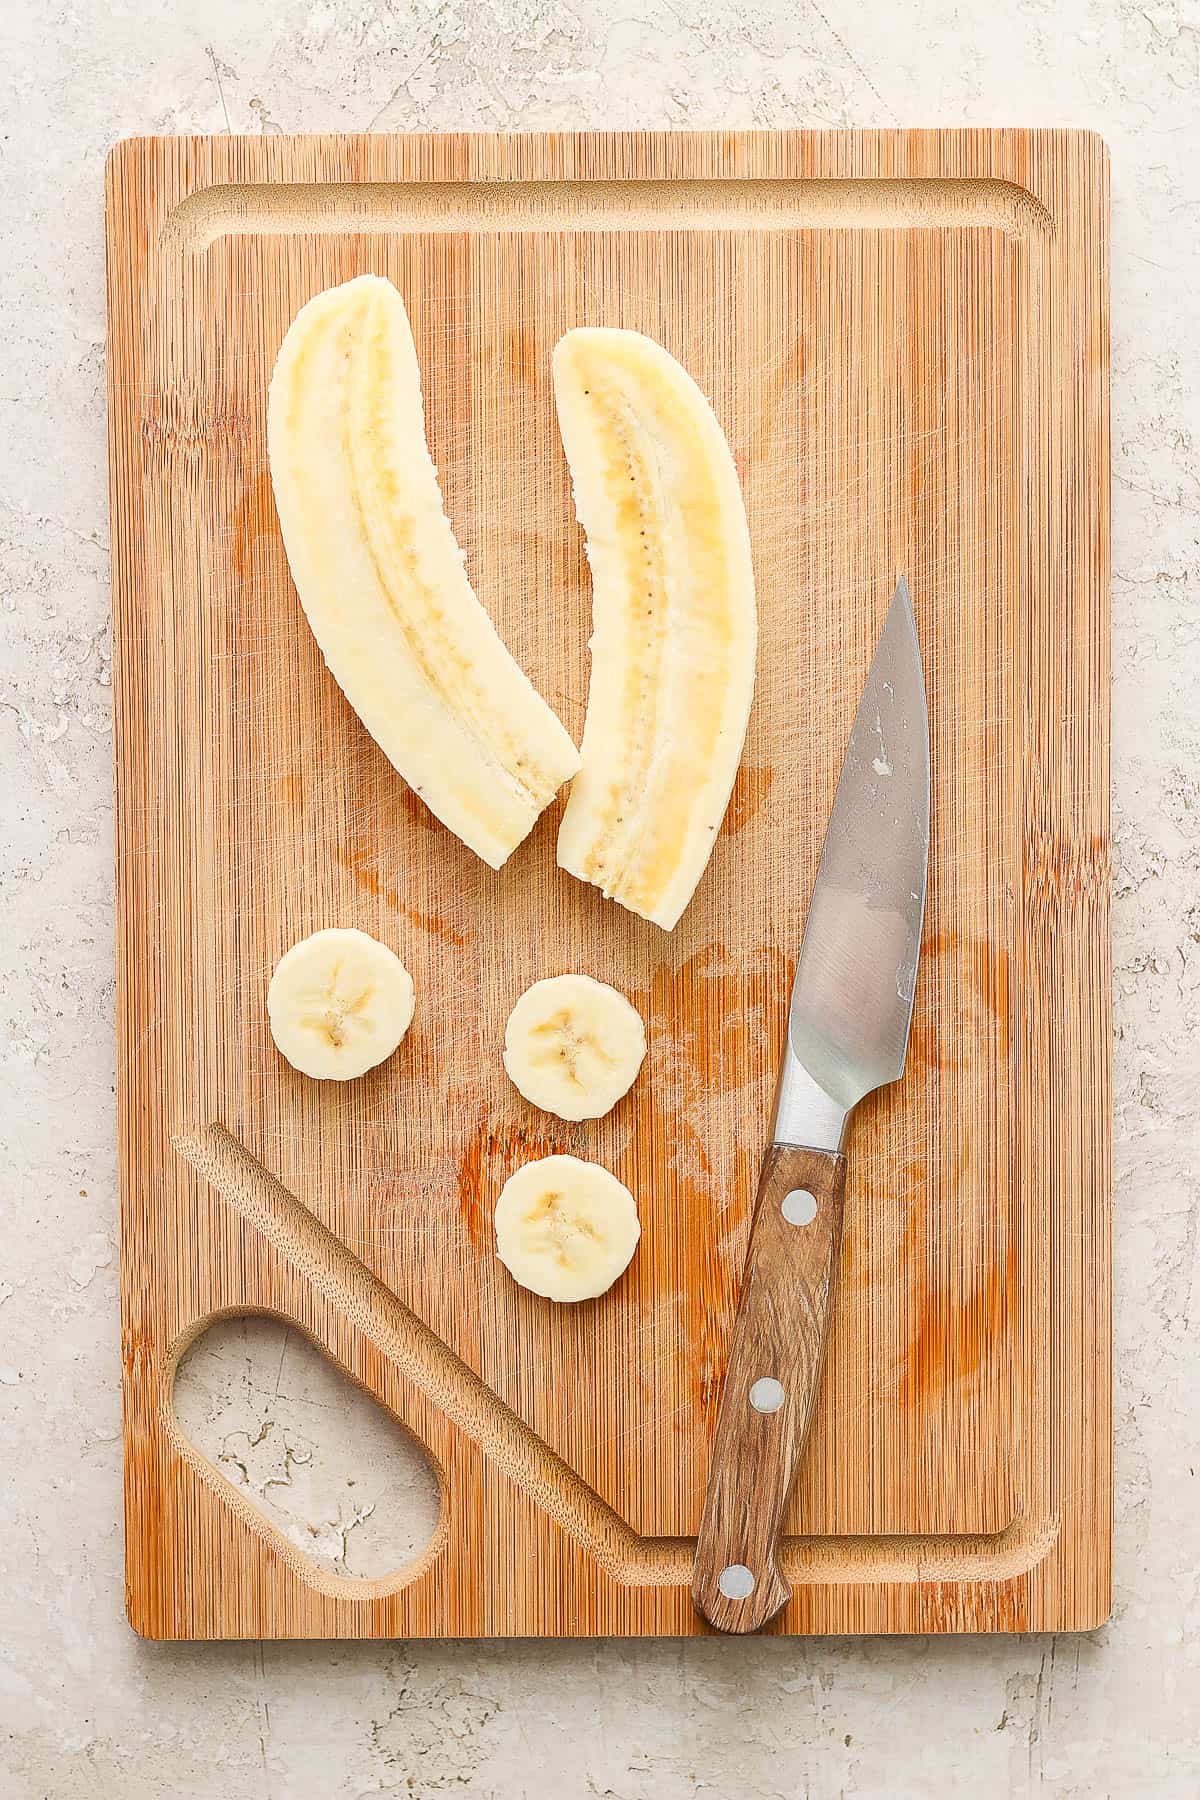 A peeled banana being cut on a cutting board.